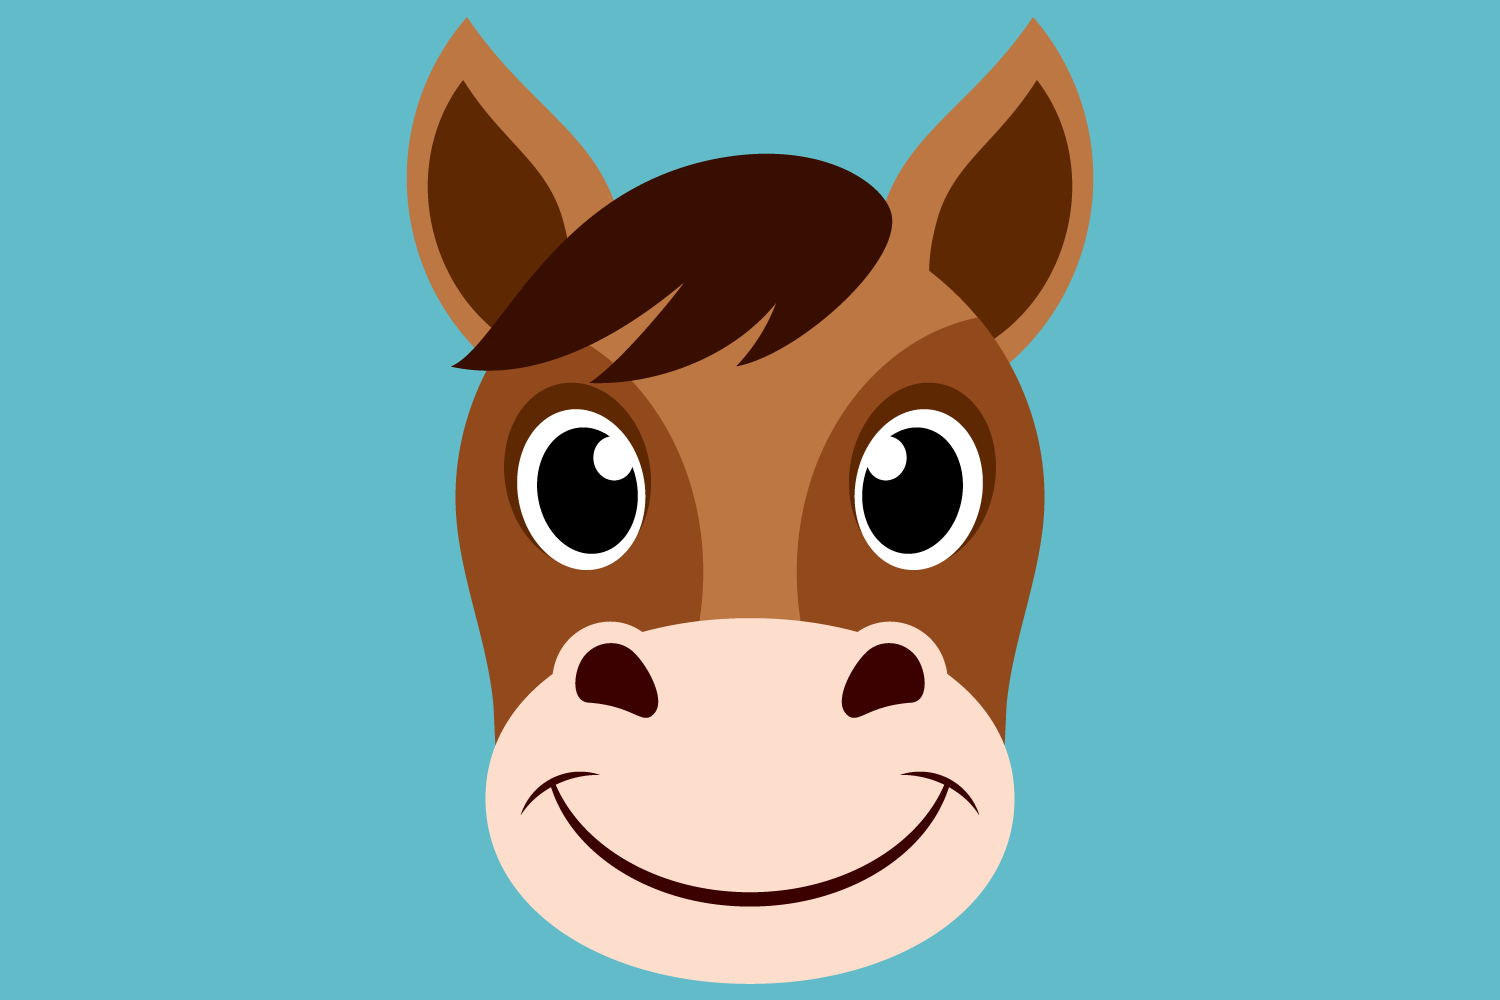 Download Cute Horse SVG Cut Files, Happy Farm Animal, Horse Face ...